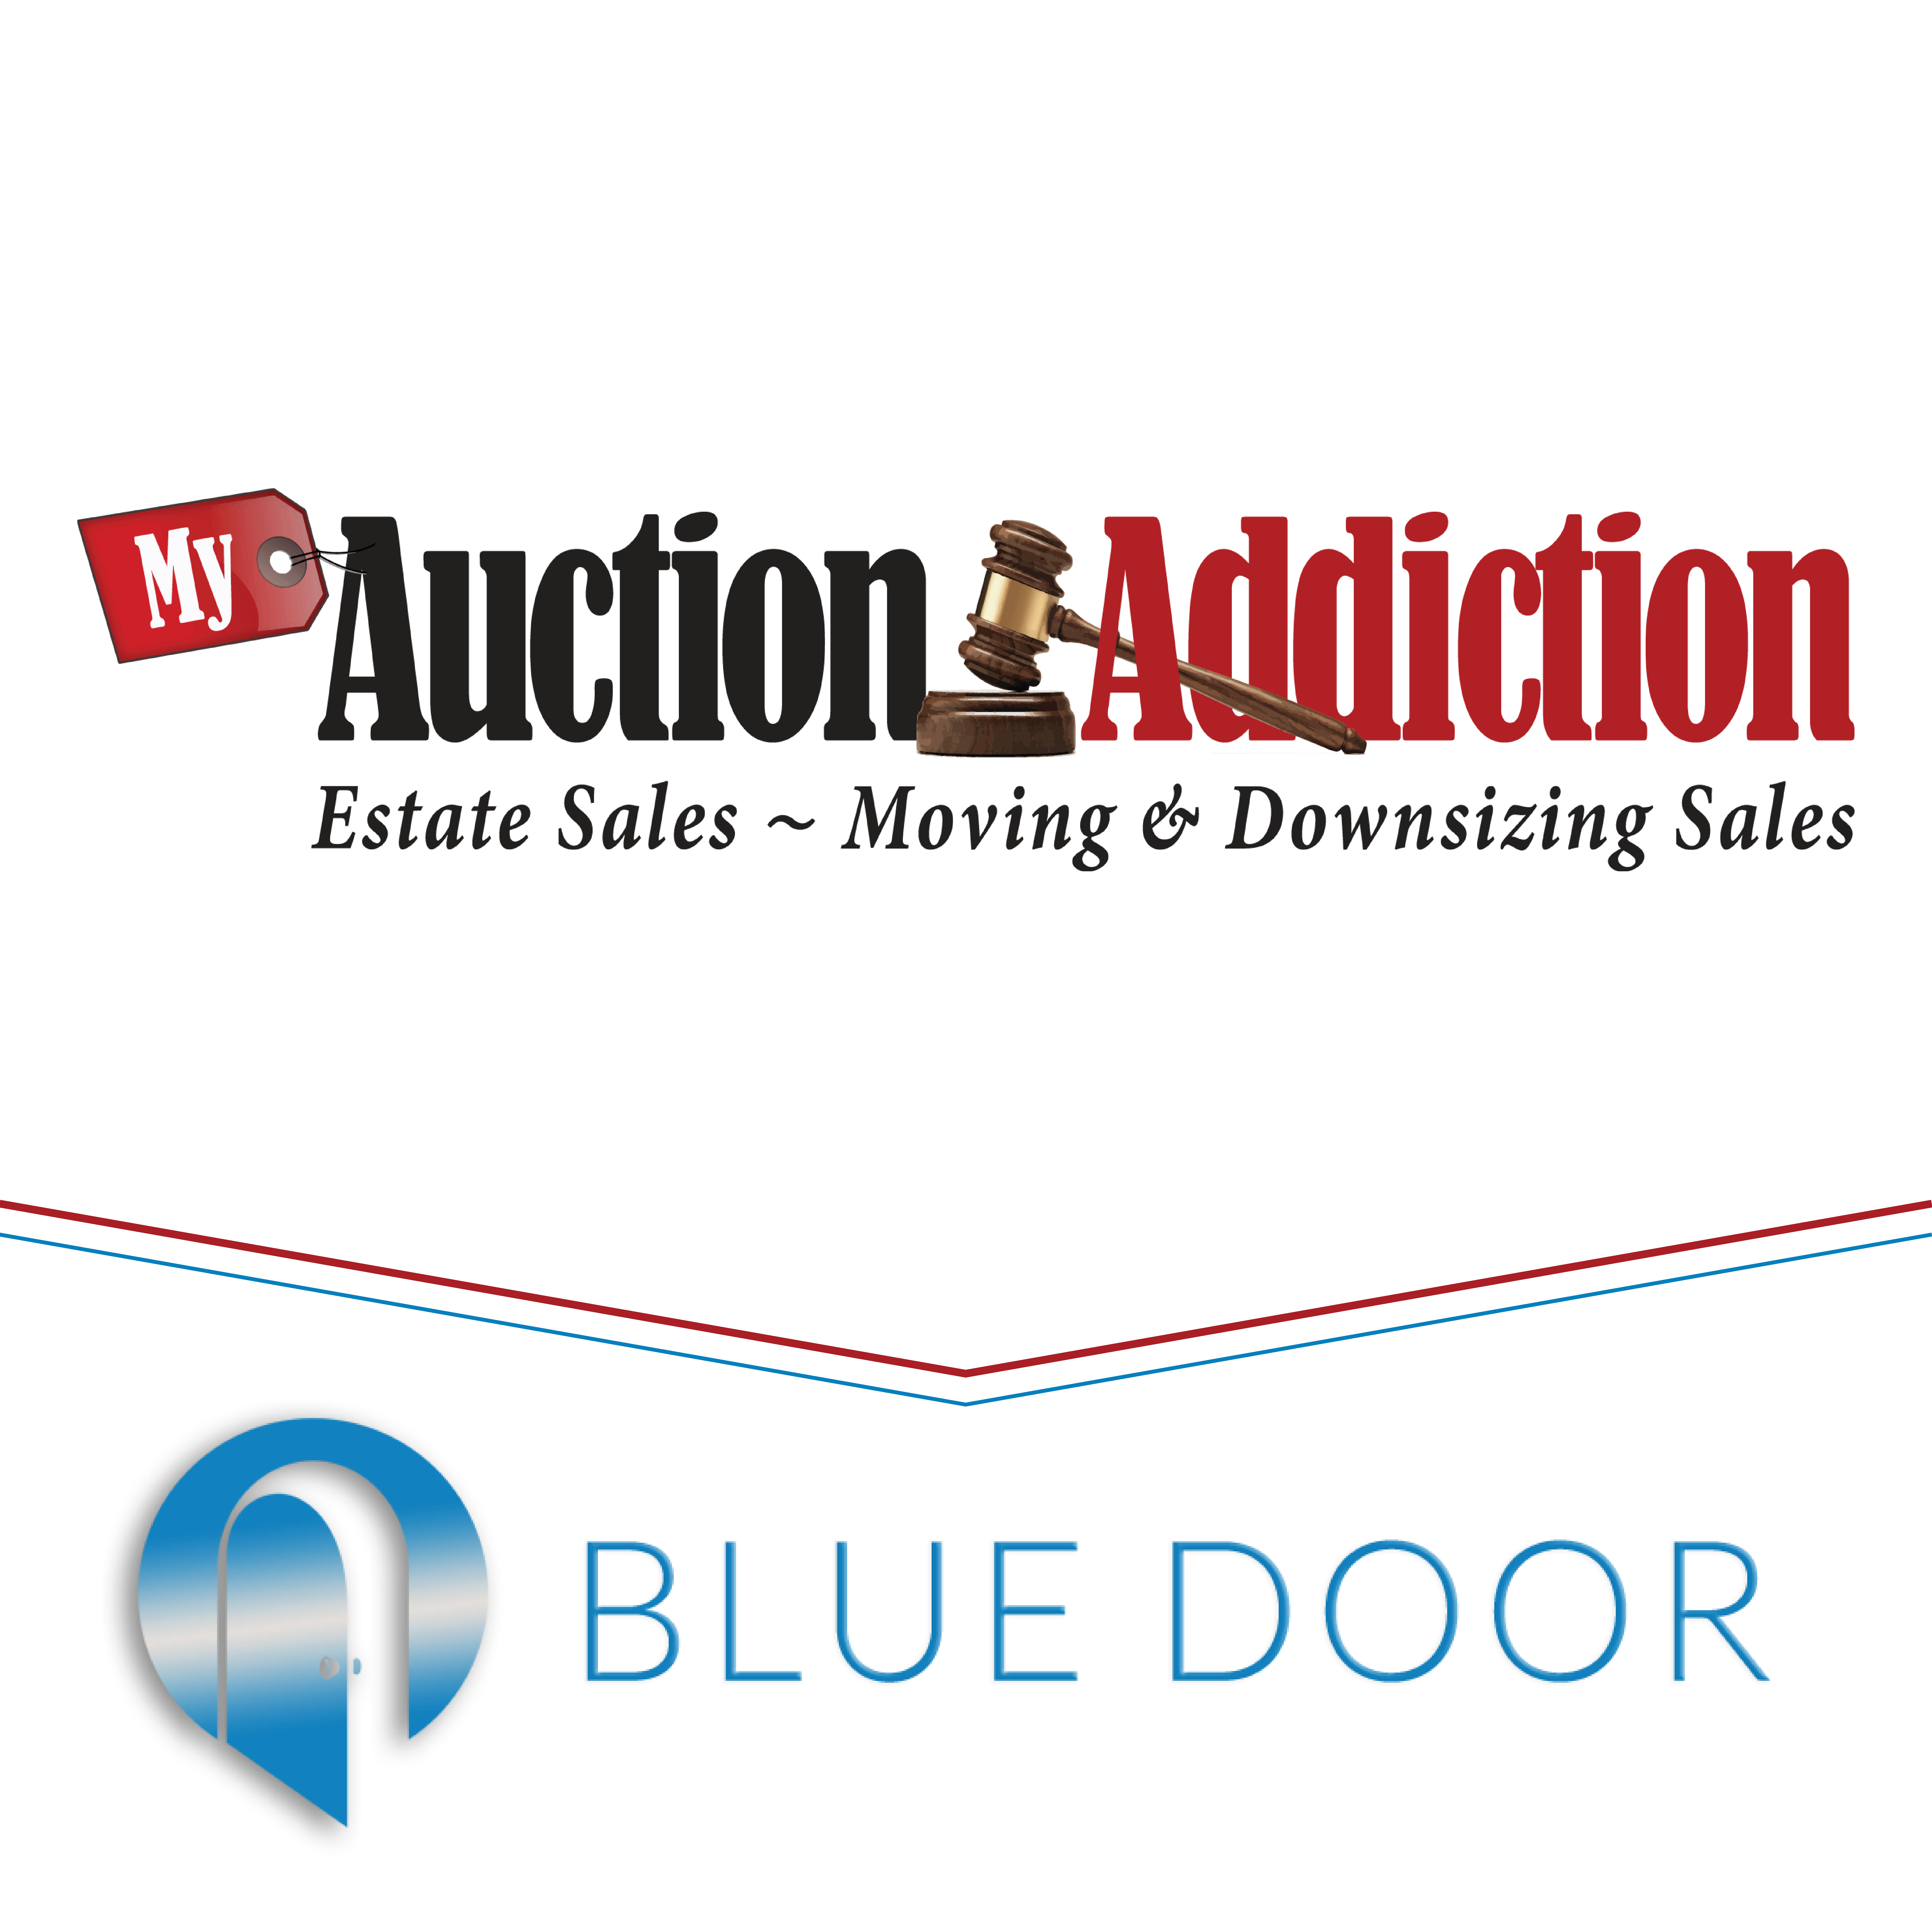 My Auction Addiction logo